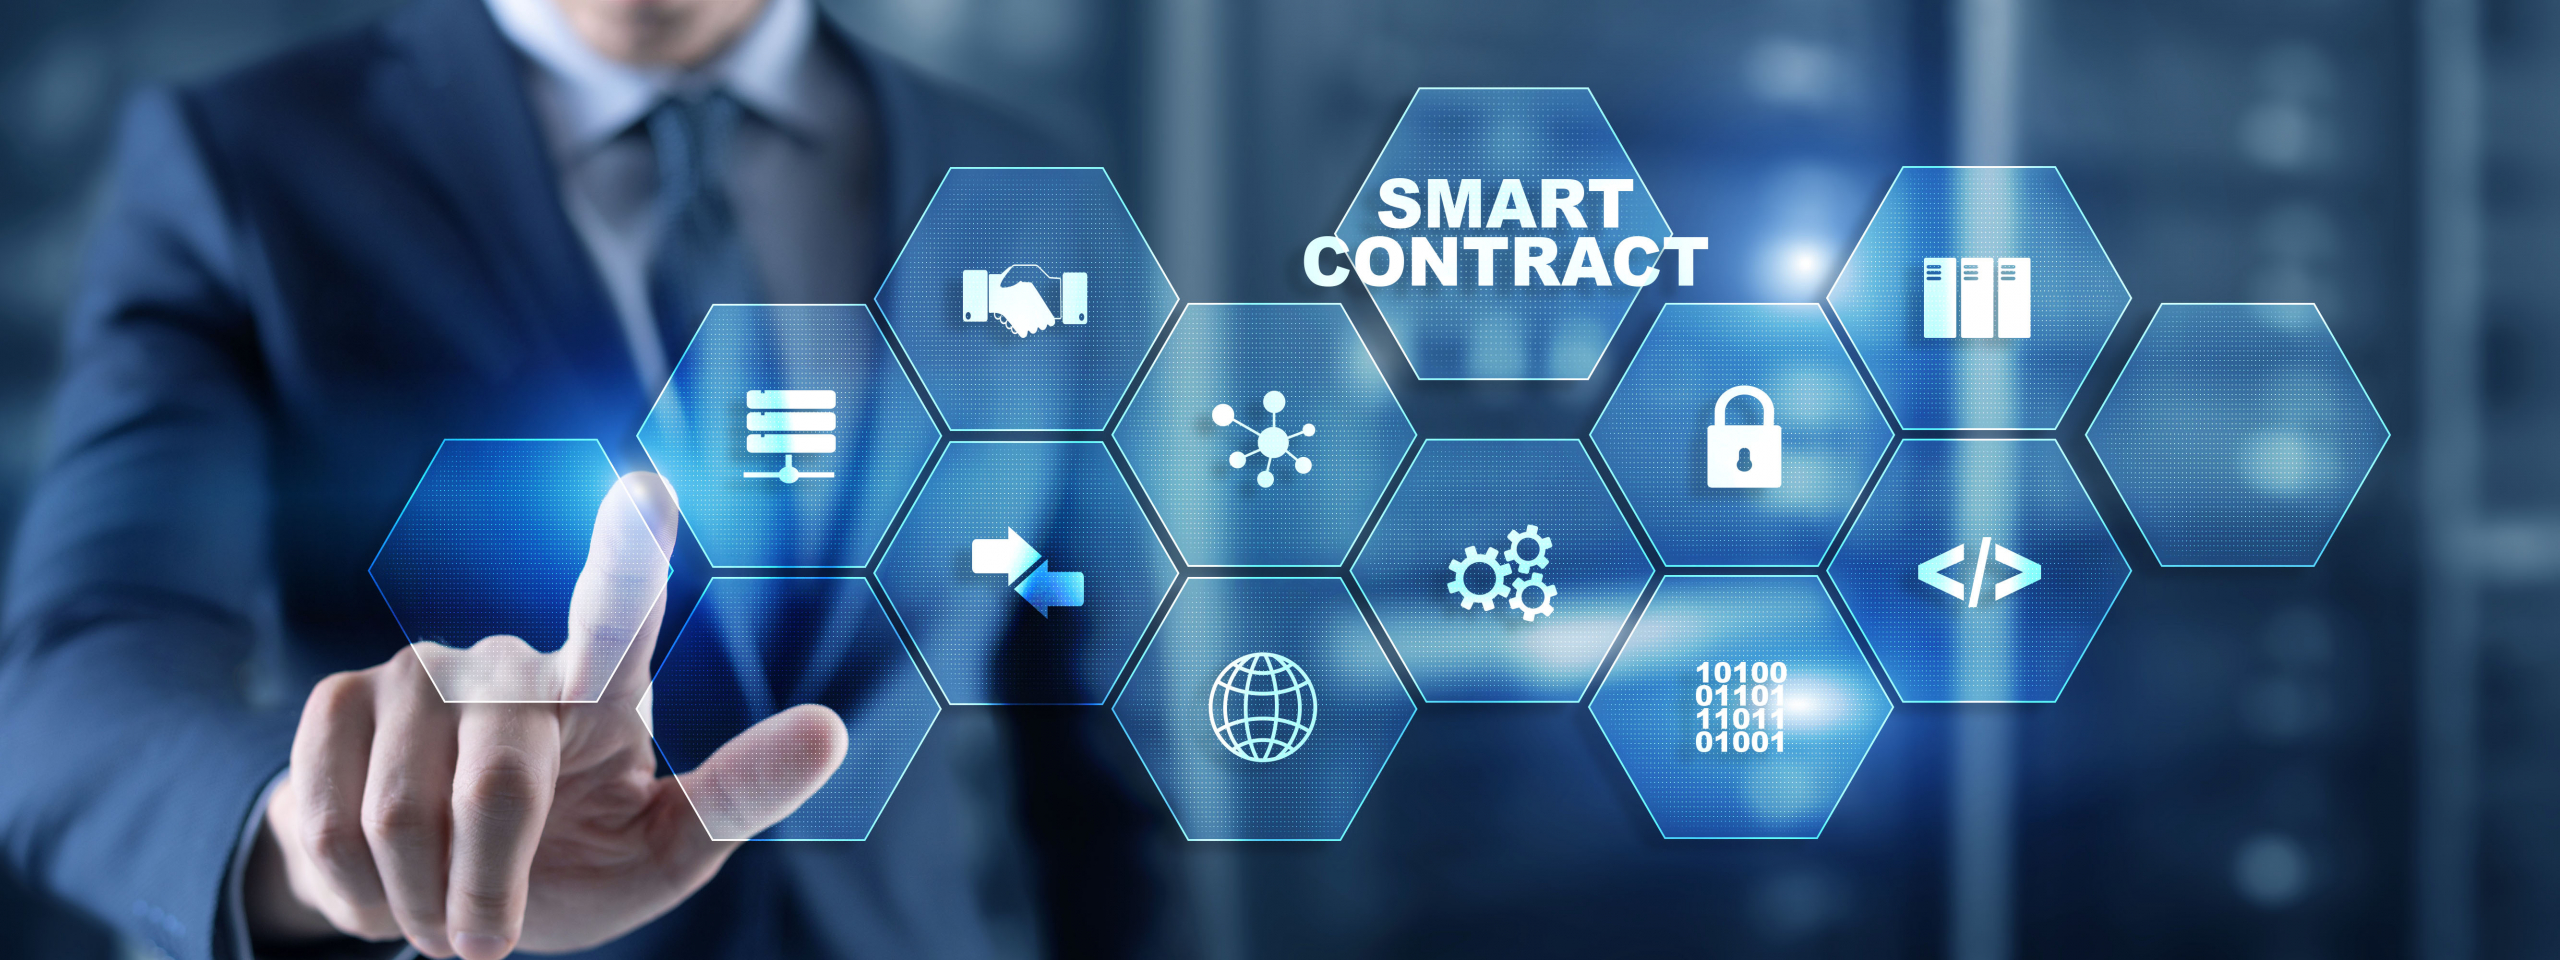 Mark Cuban: Commercial Smart Contract Adoption Next Market Engine
